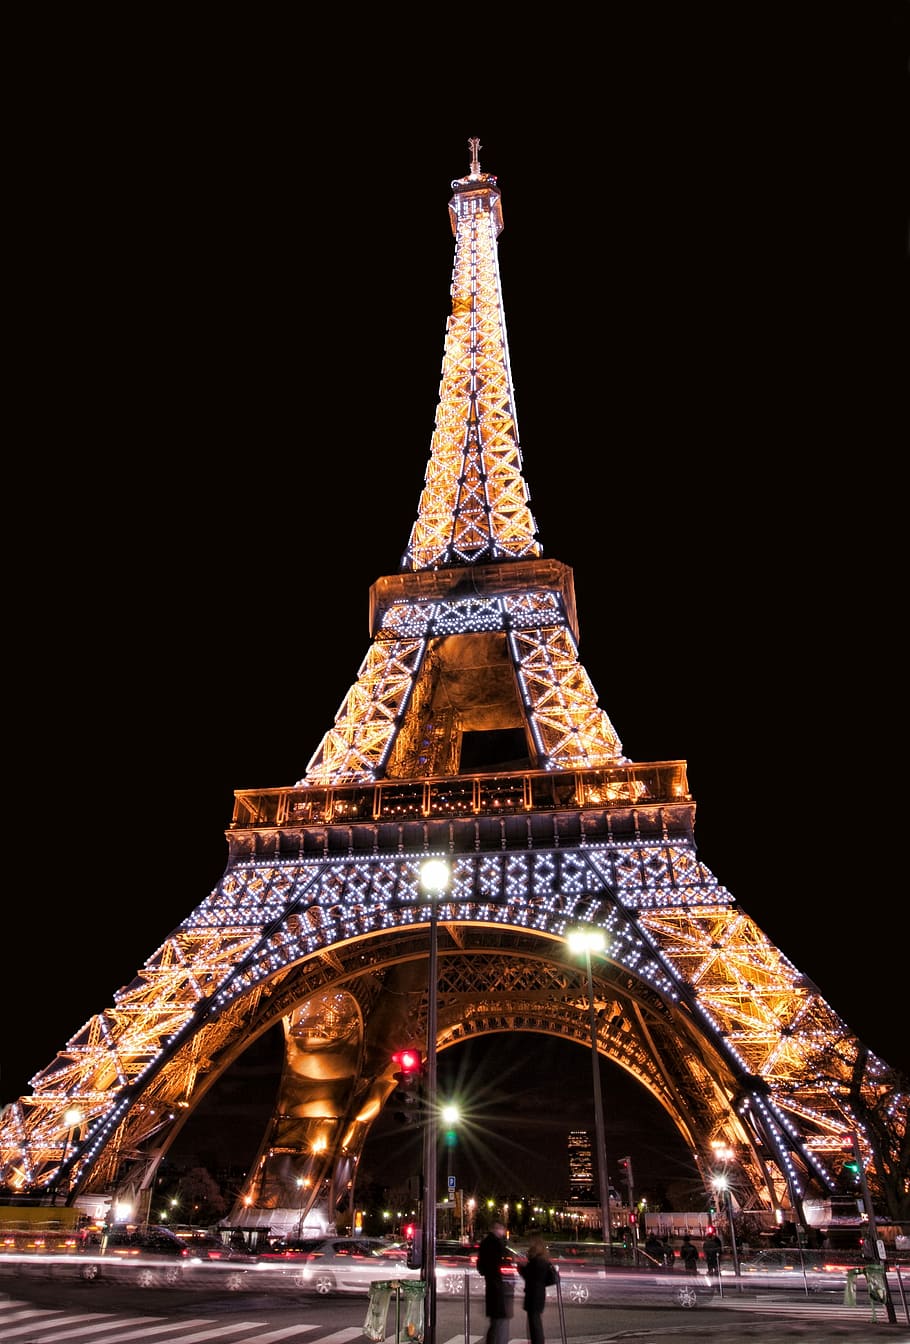 Eiffel Tower, Monument, Paris, France, paris, france, tower, architecture, heritage, capital, flicker